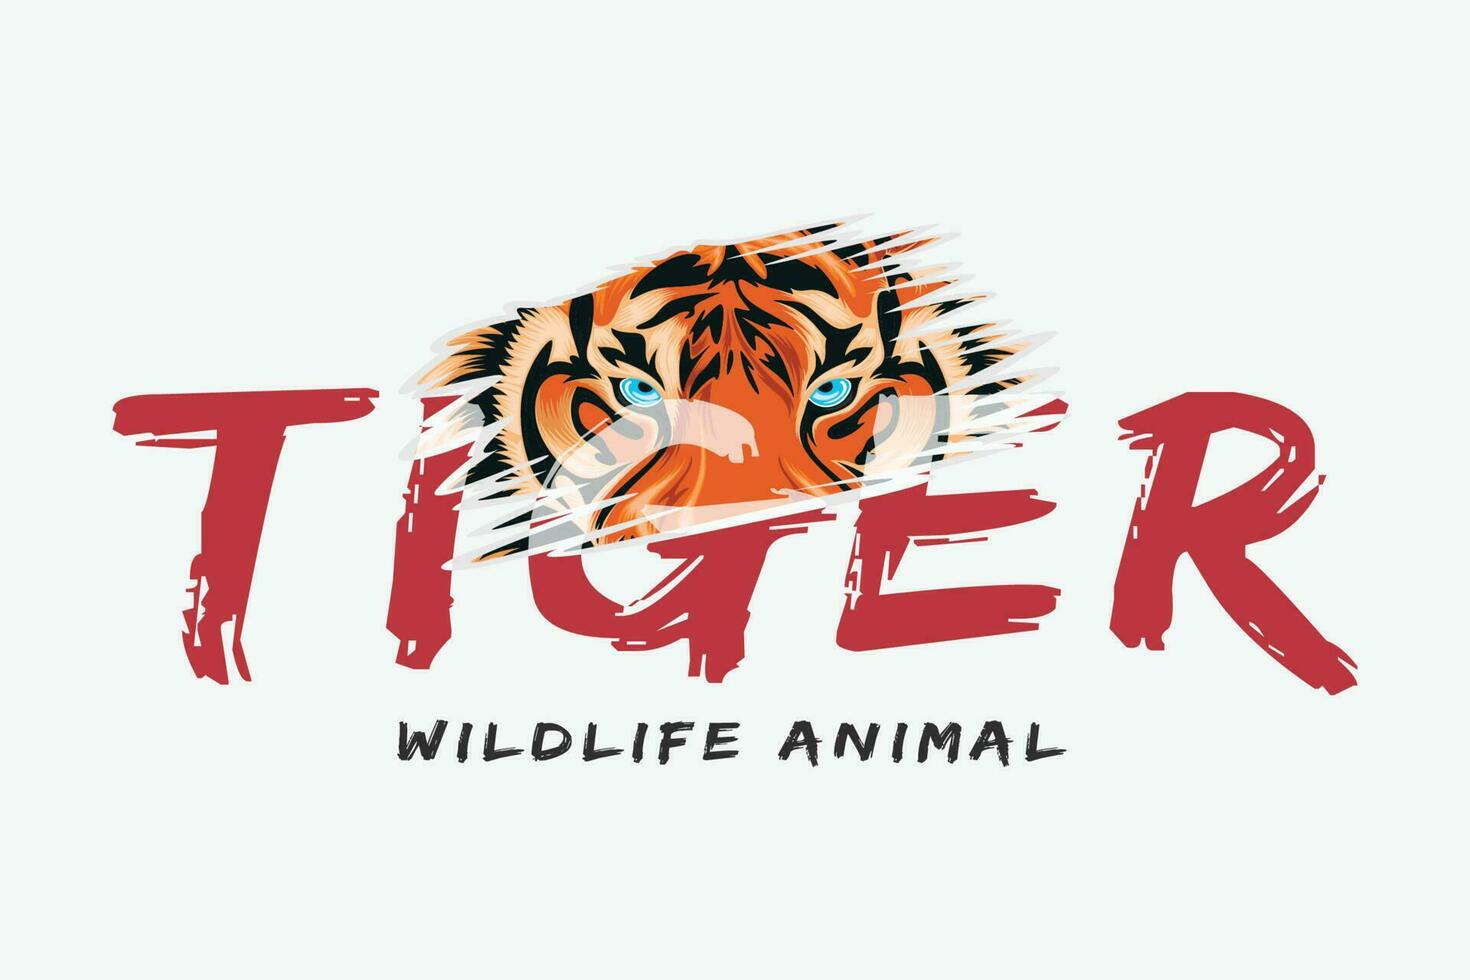 Illustration of tiger head with wildlife animal slogan vector